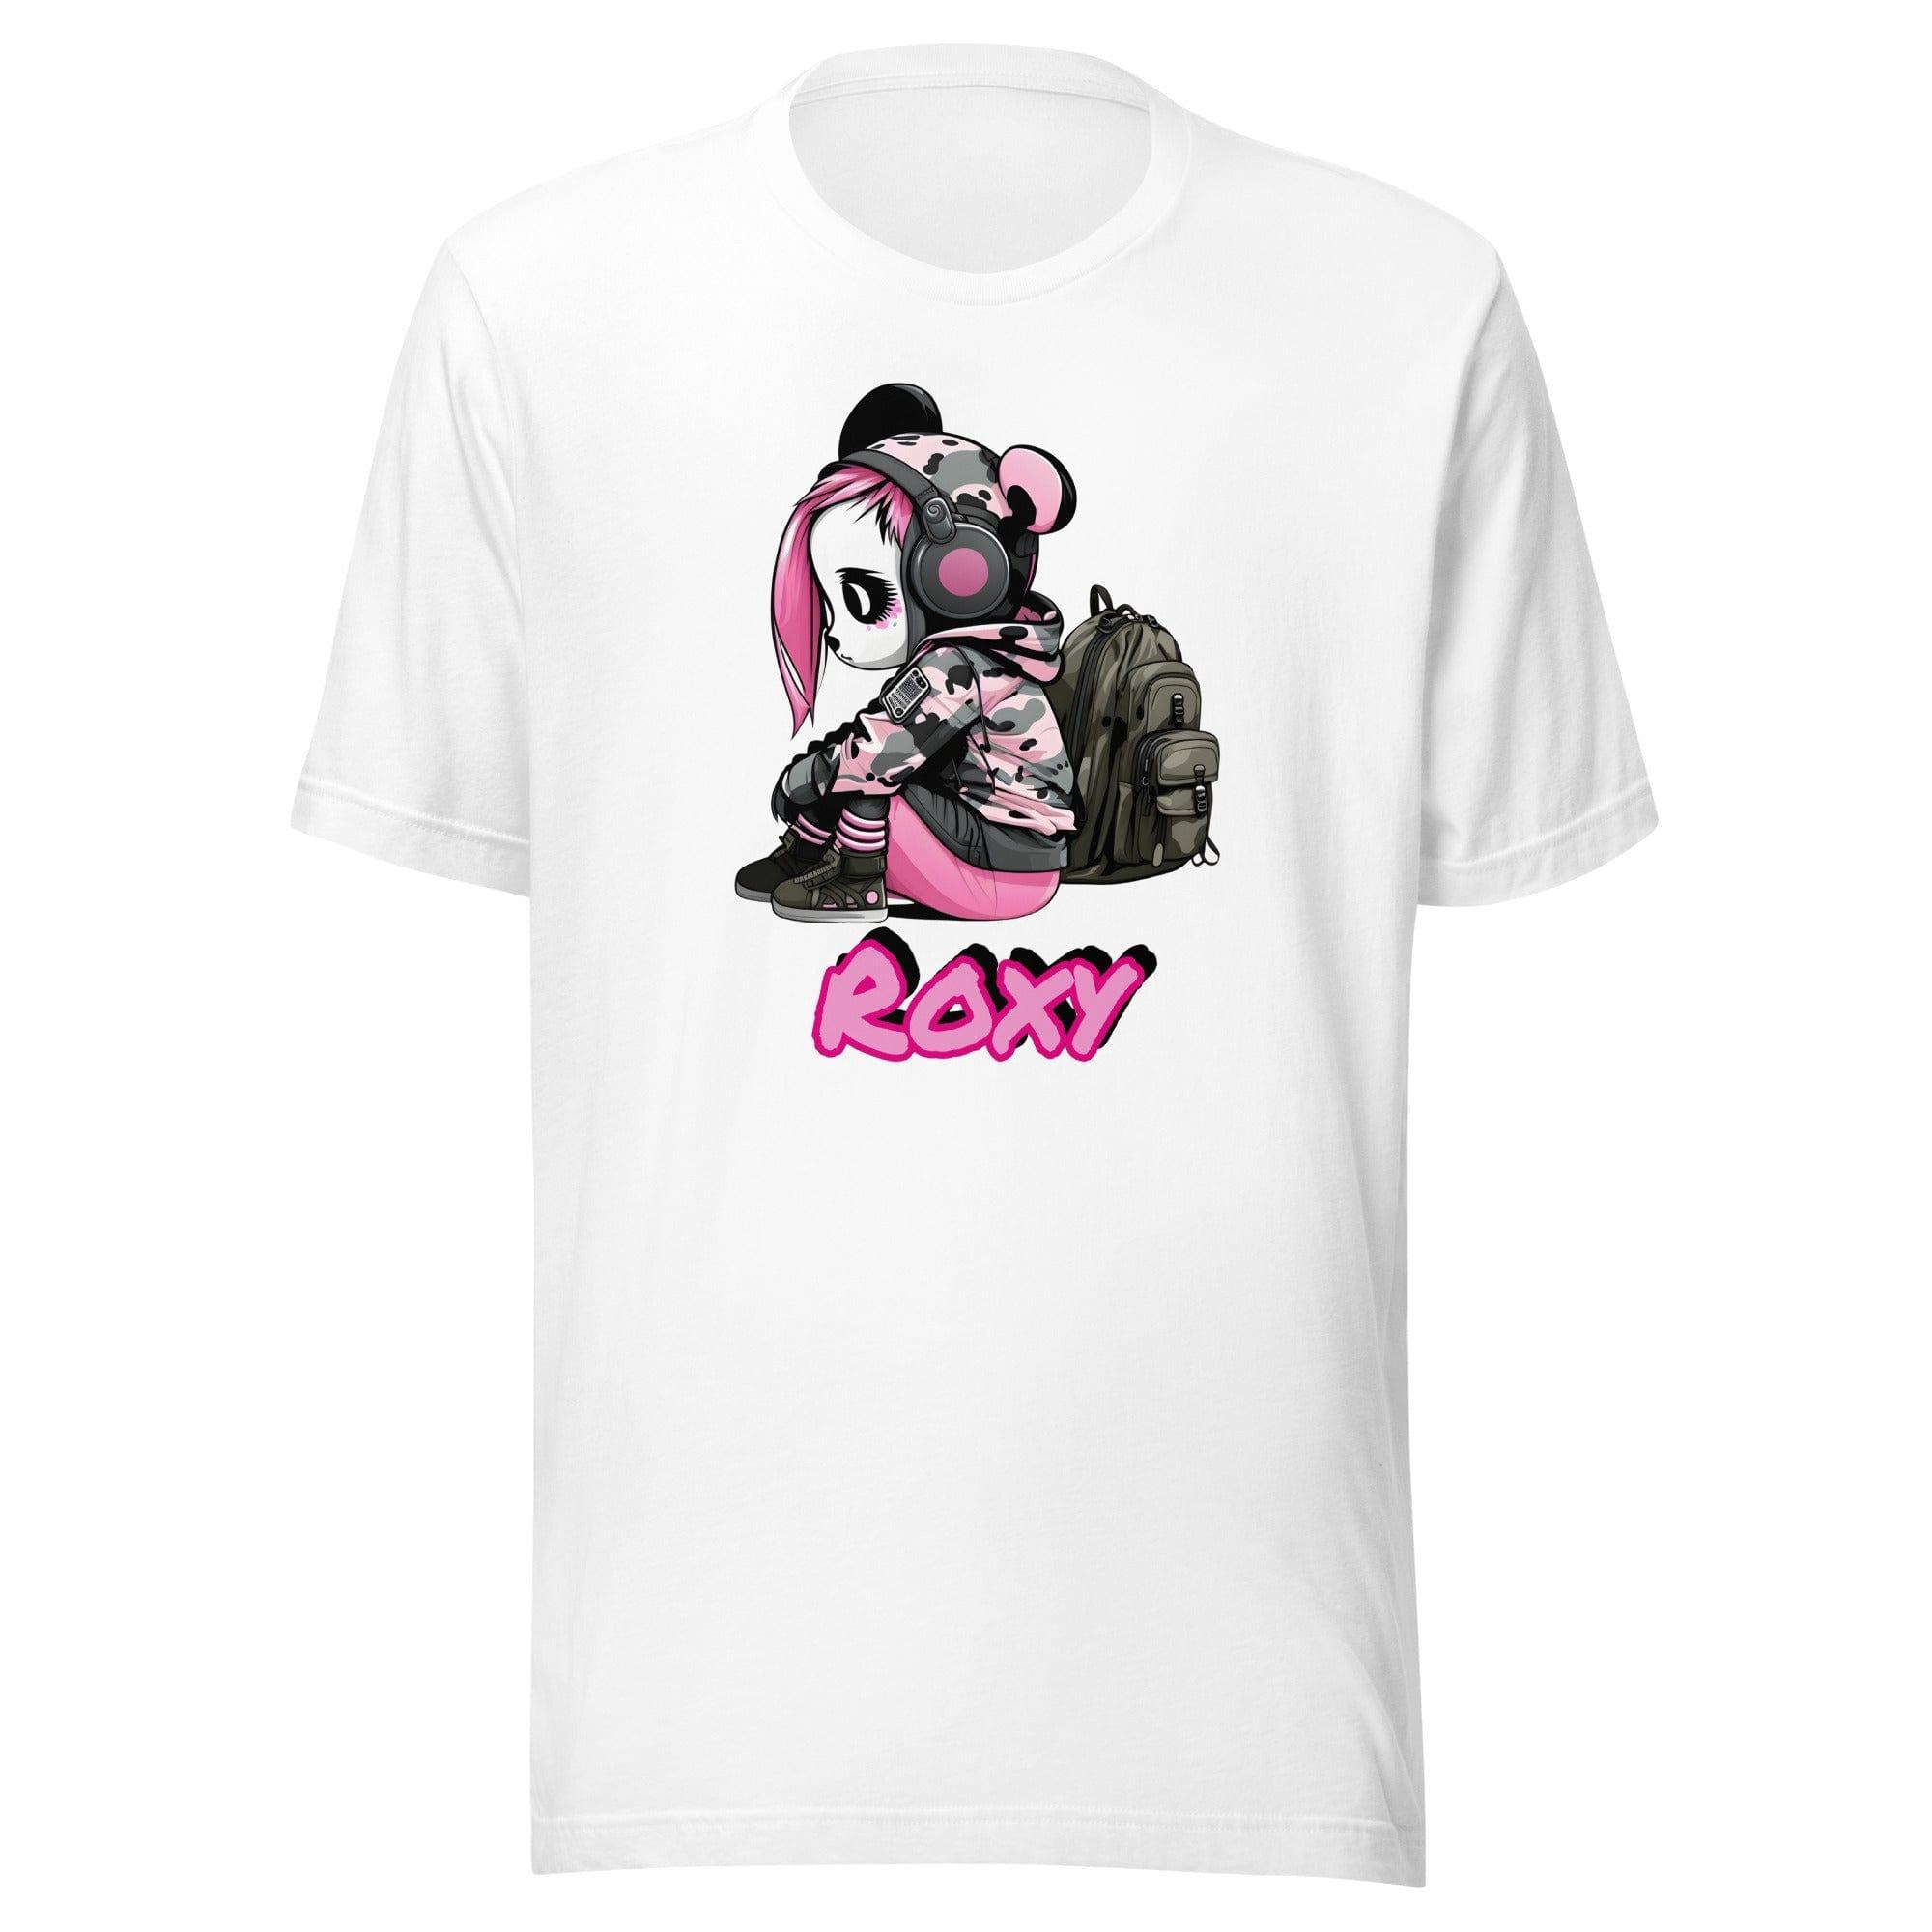 Panda T-shirt Street Girl Panda Series Roxy Short Sleeve Top - TopKoalaTee